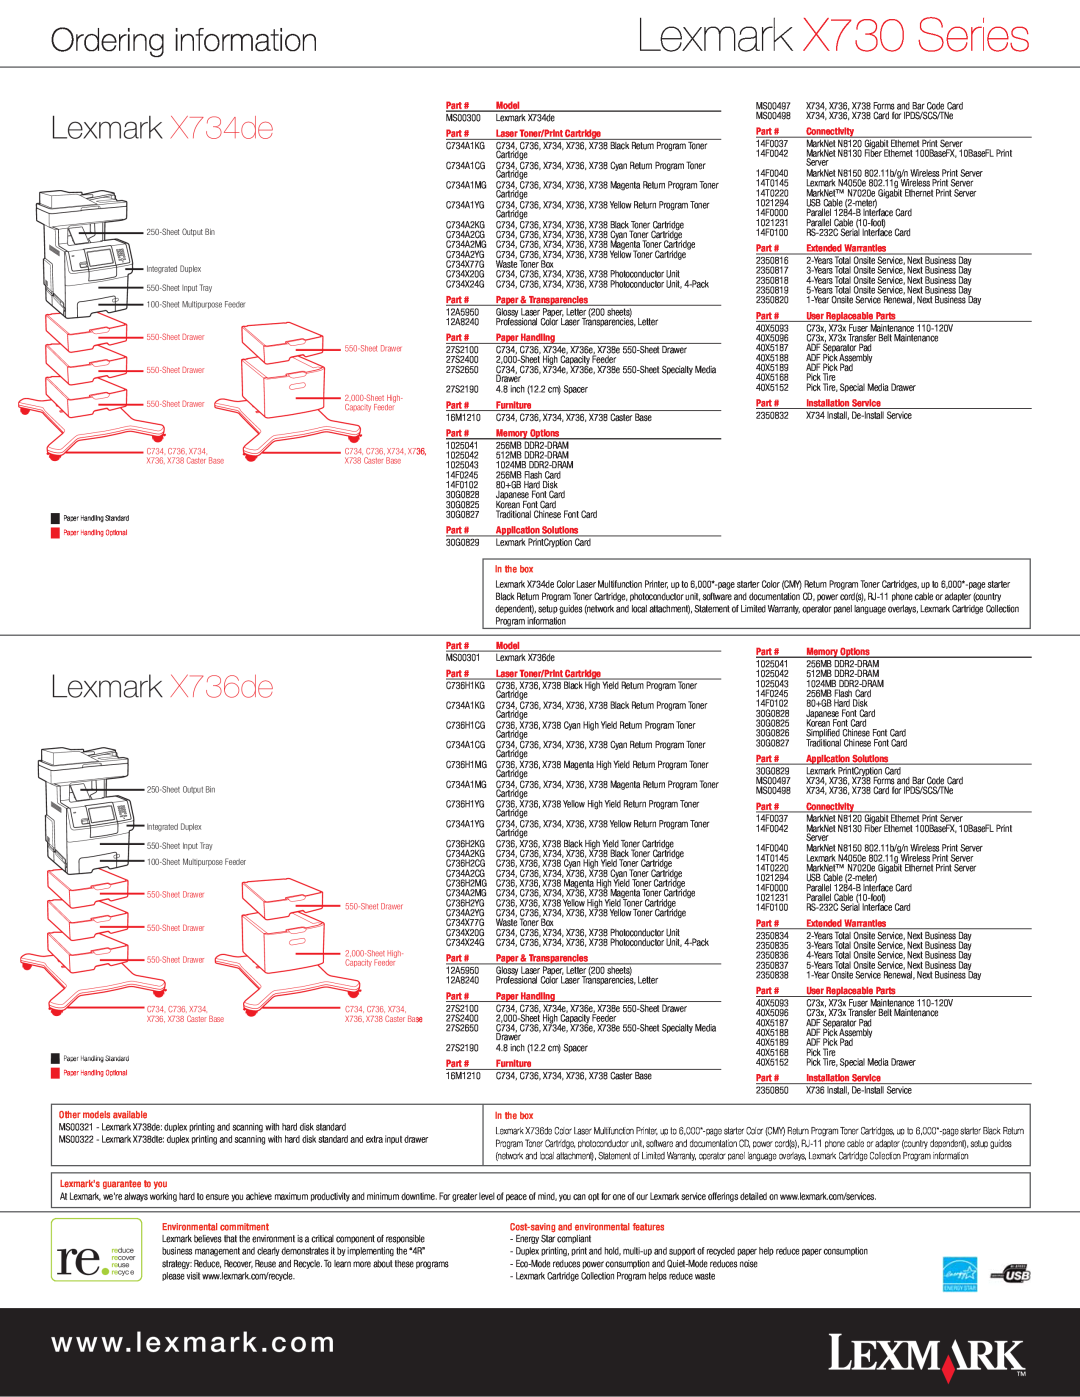 Lexmark manual Ordering information, Lexmark X734de, Lexmark X736de, Lexmark X730 Series, w w w. l e x m a r k . c o m 